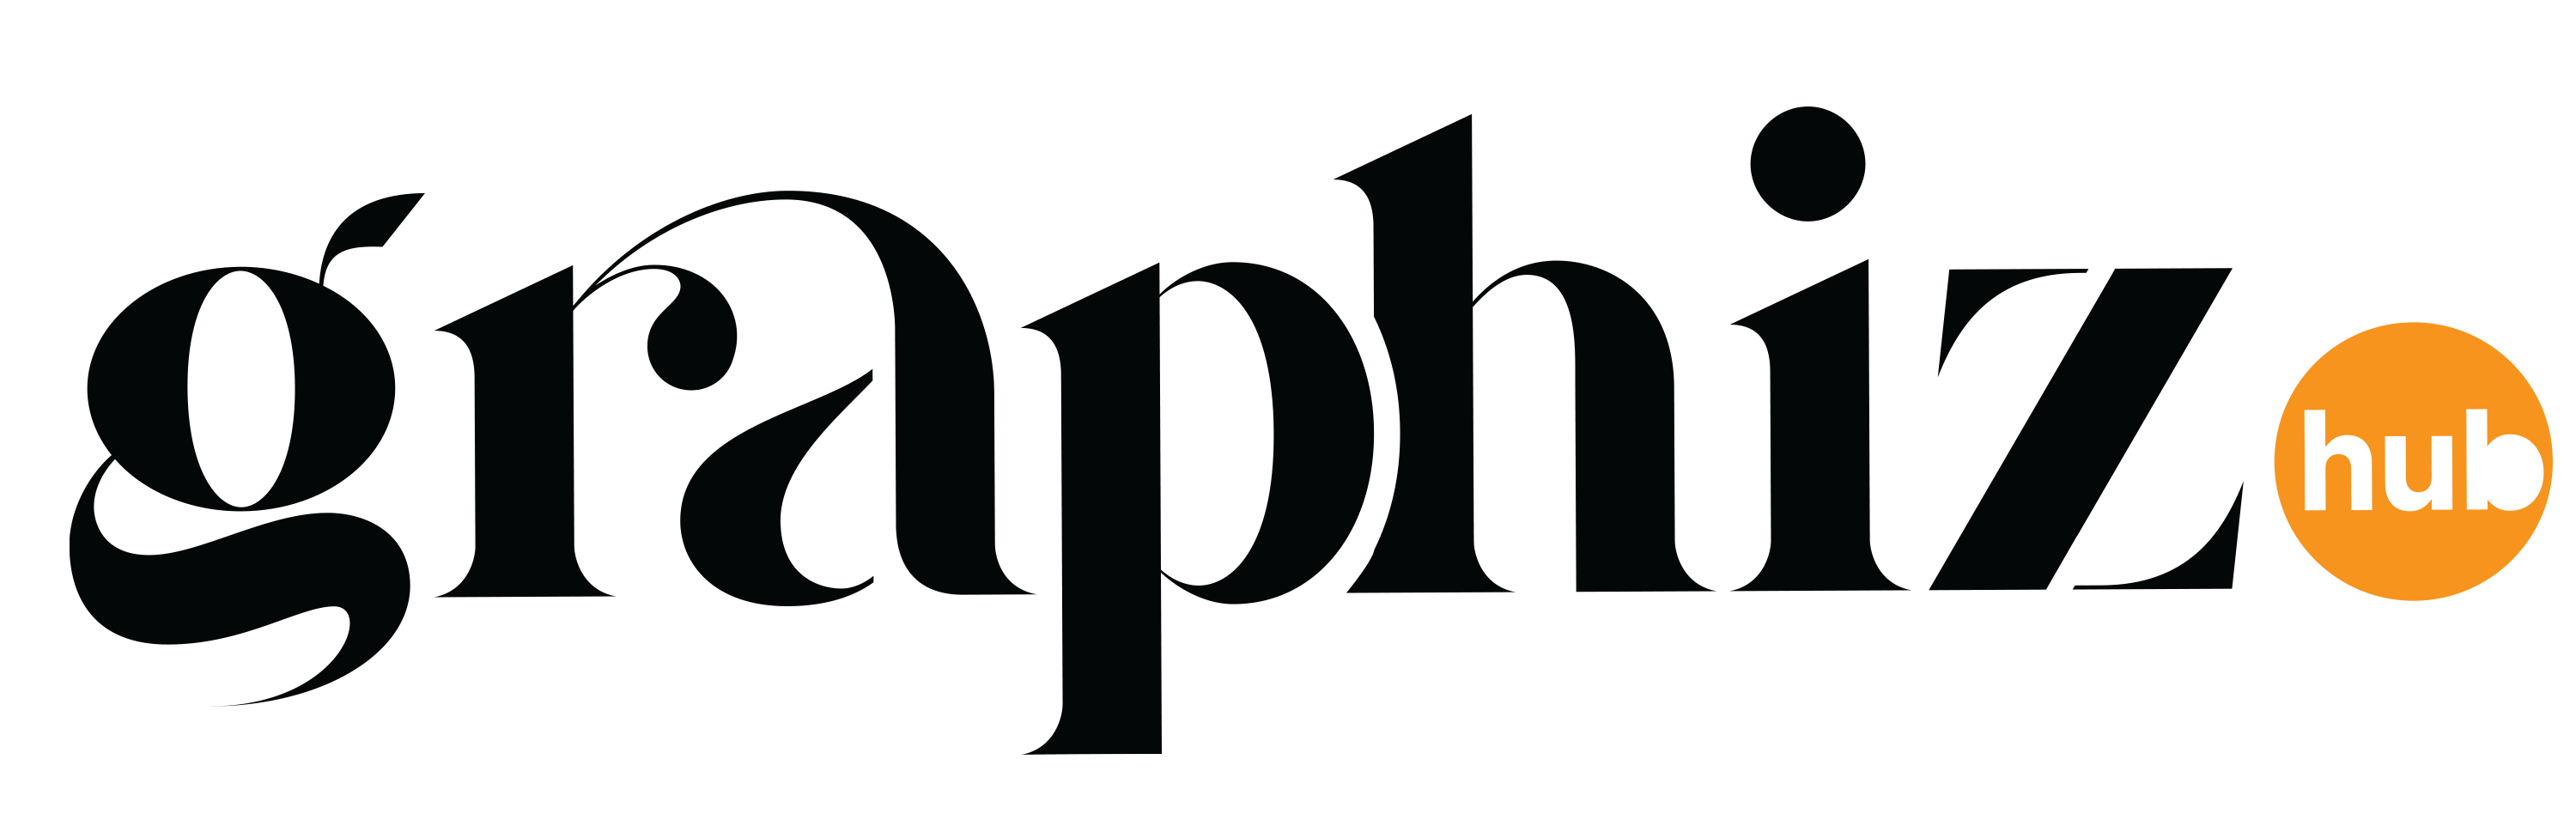 graphizhub logo